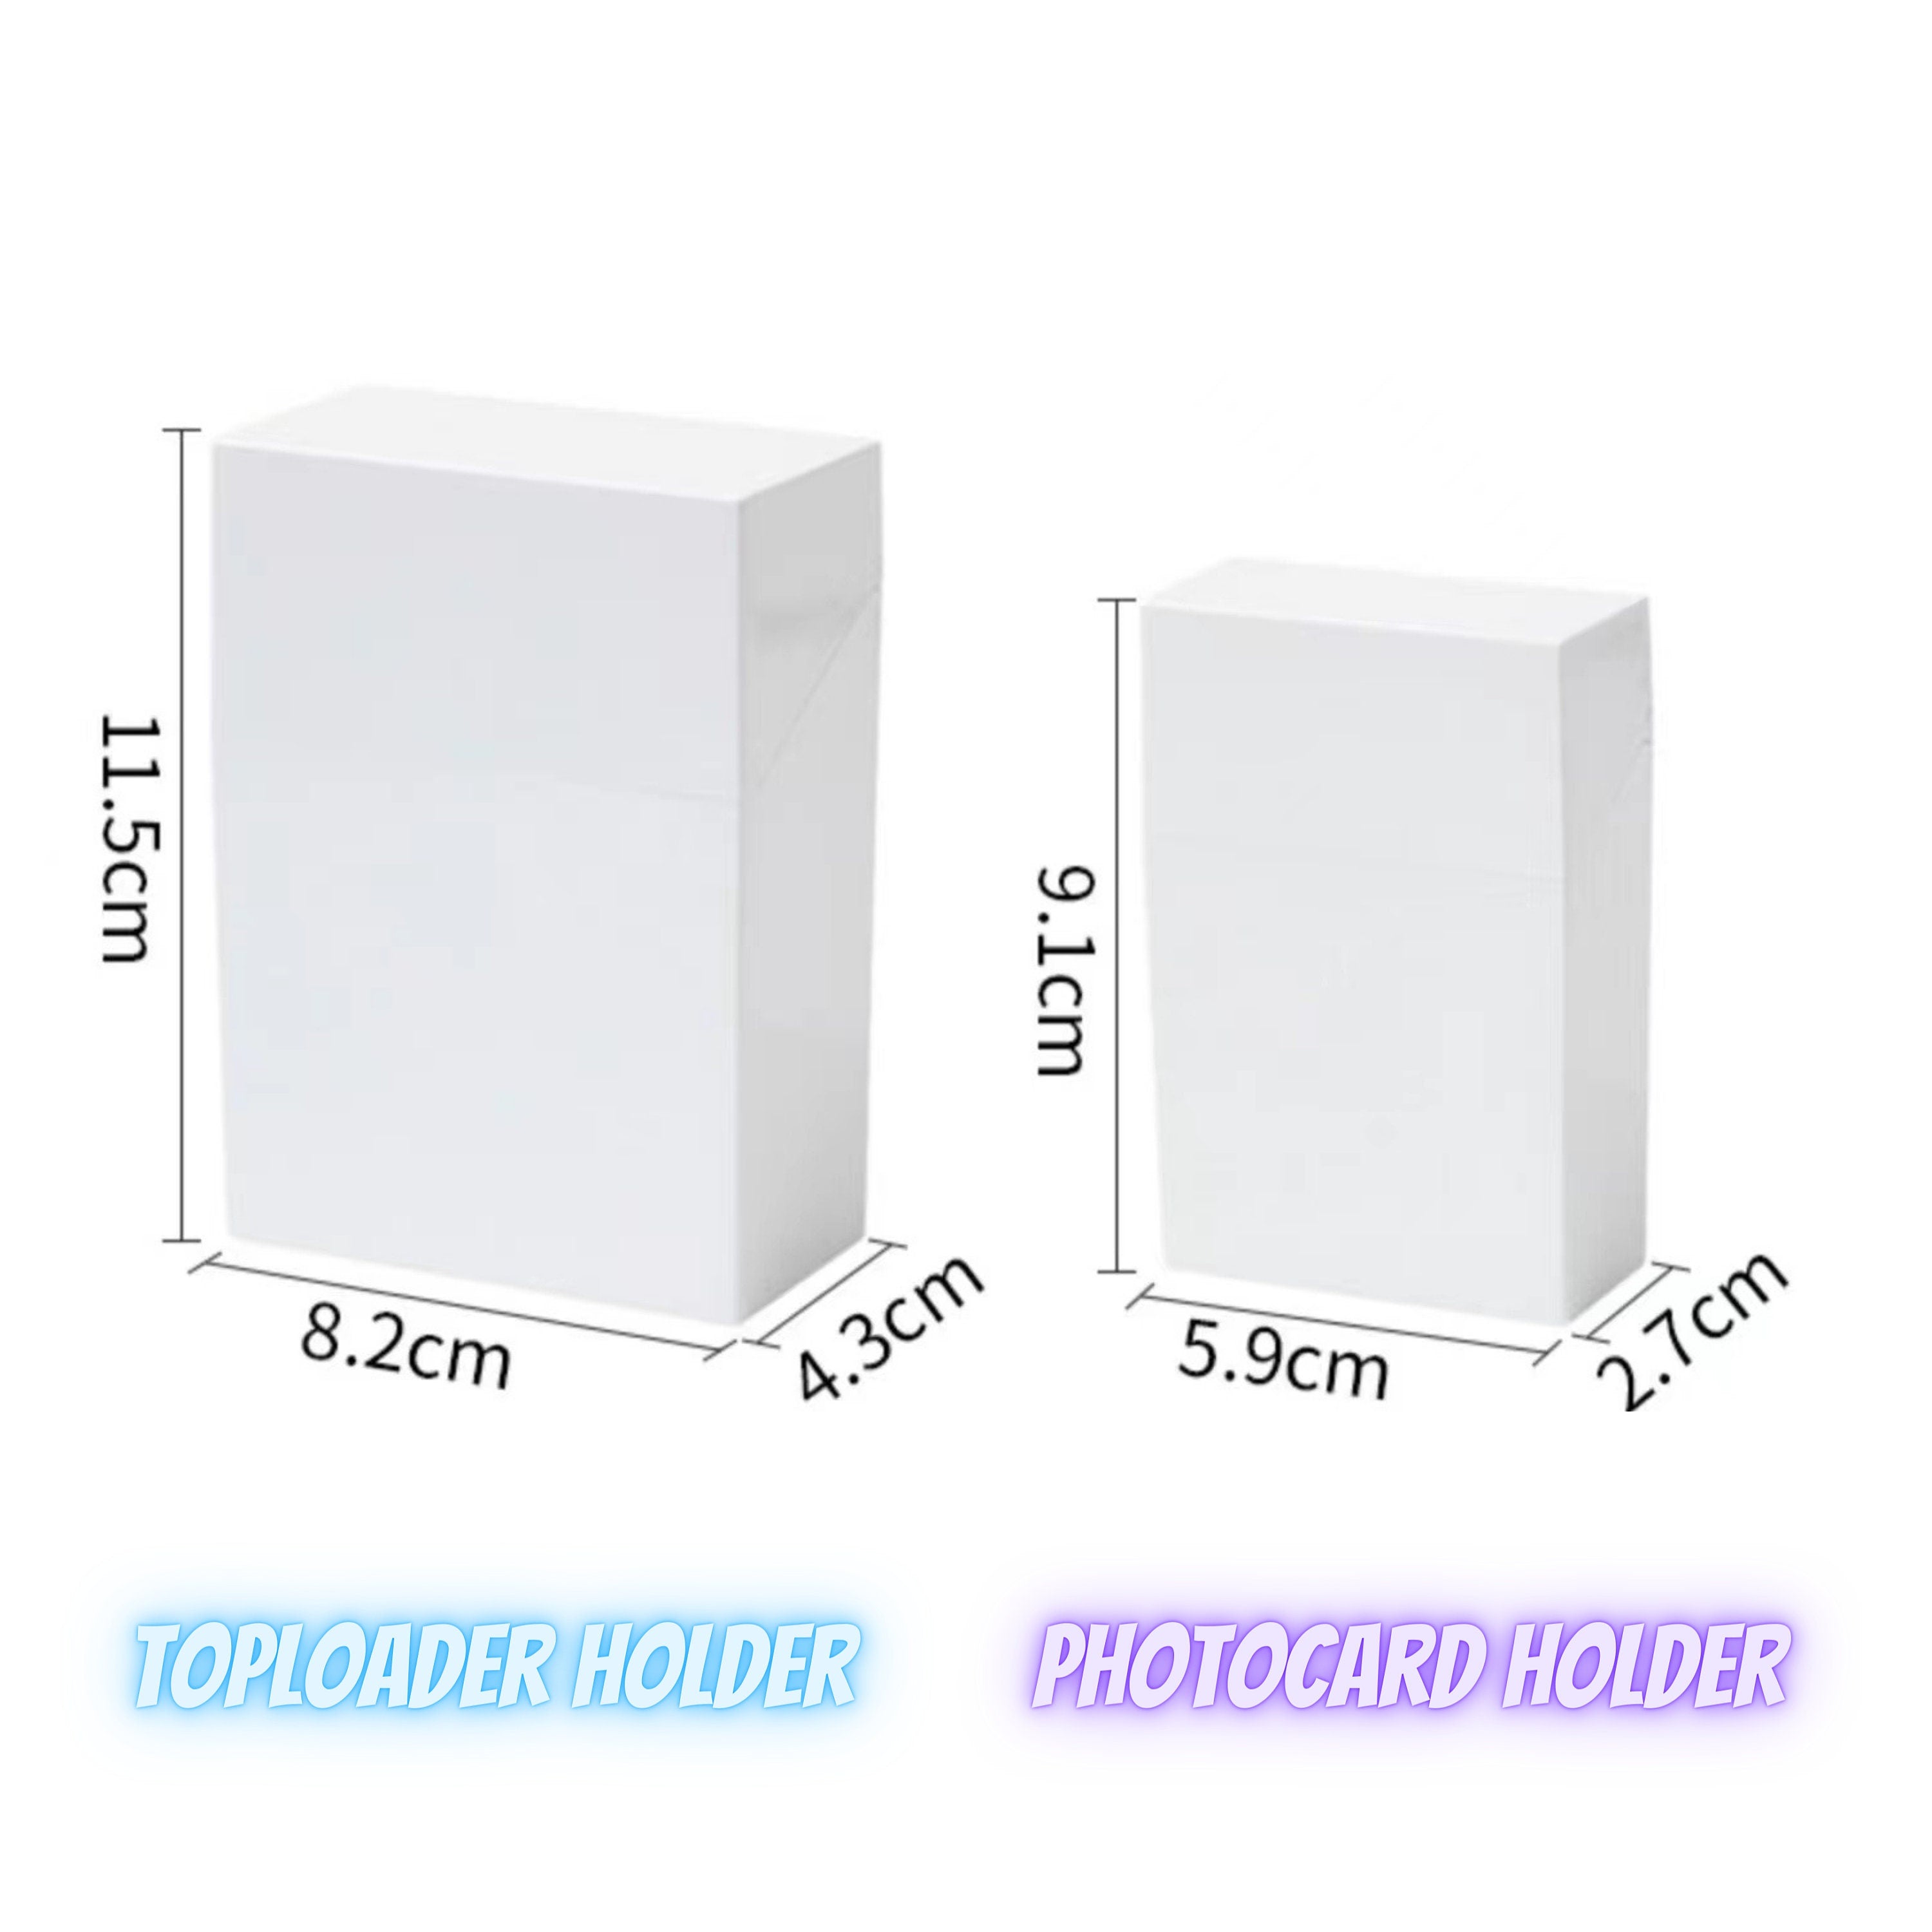 Minimalist Kpop Deco Toploader Box White Photocard Holder Box Toploader Holder Box Photocard Holder Photocard Storage Box Container